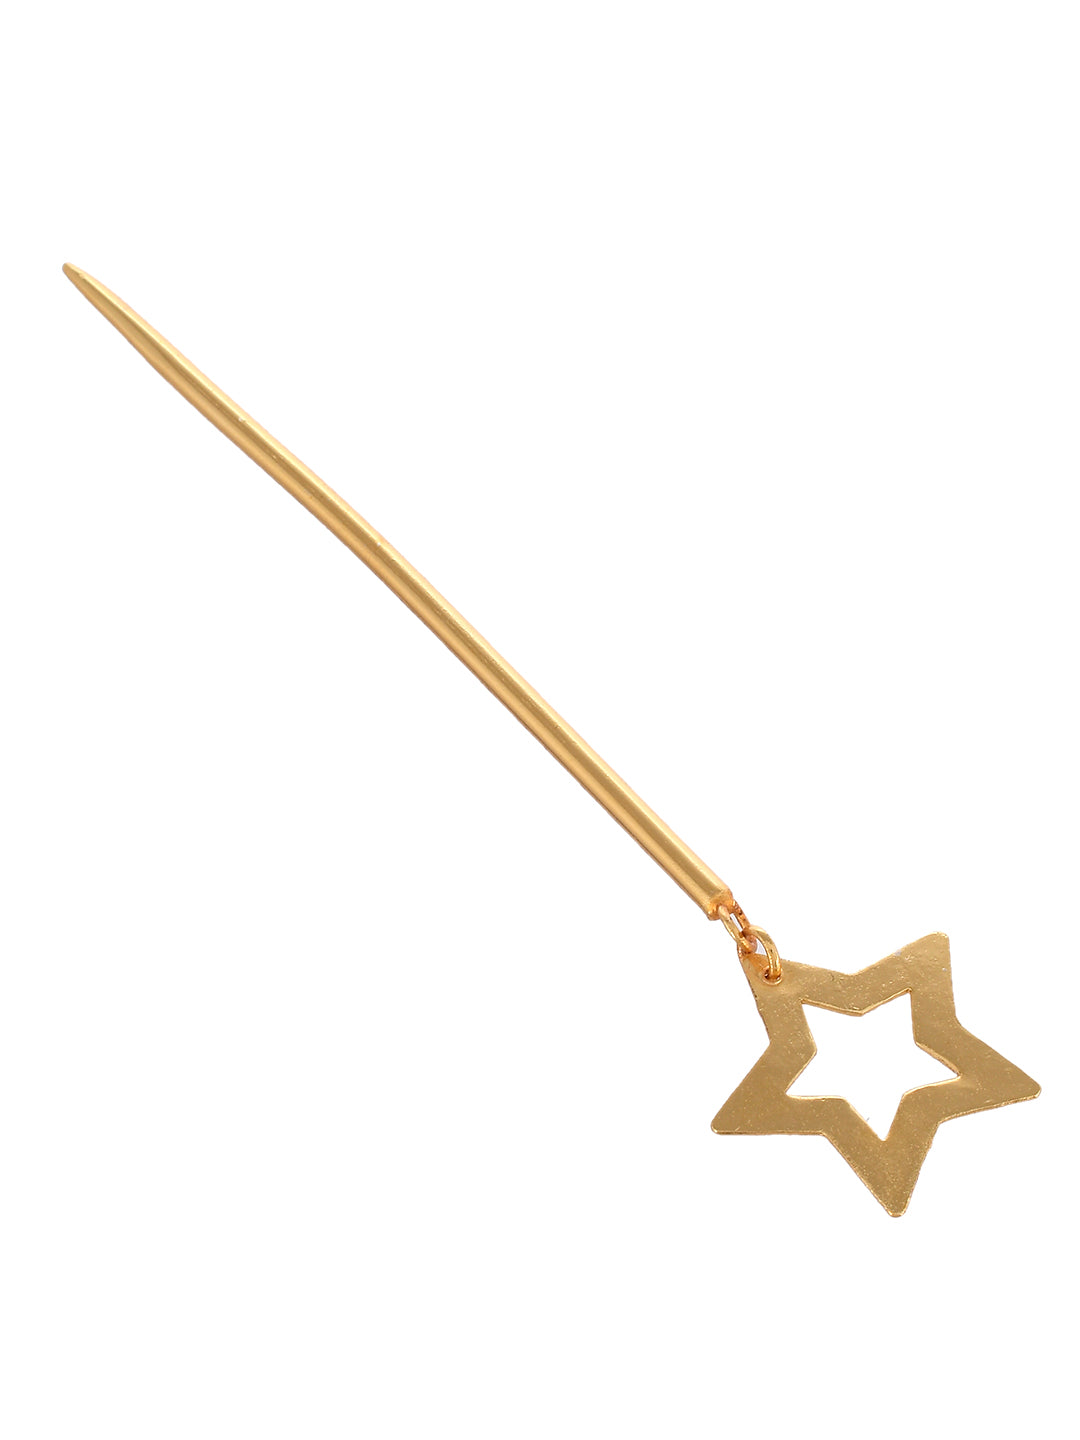 Pentagon Tama Kanzashi Gold Shooting Star Celtic Hair Stick